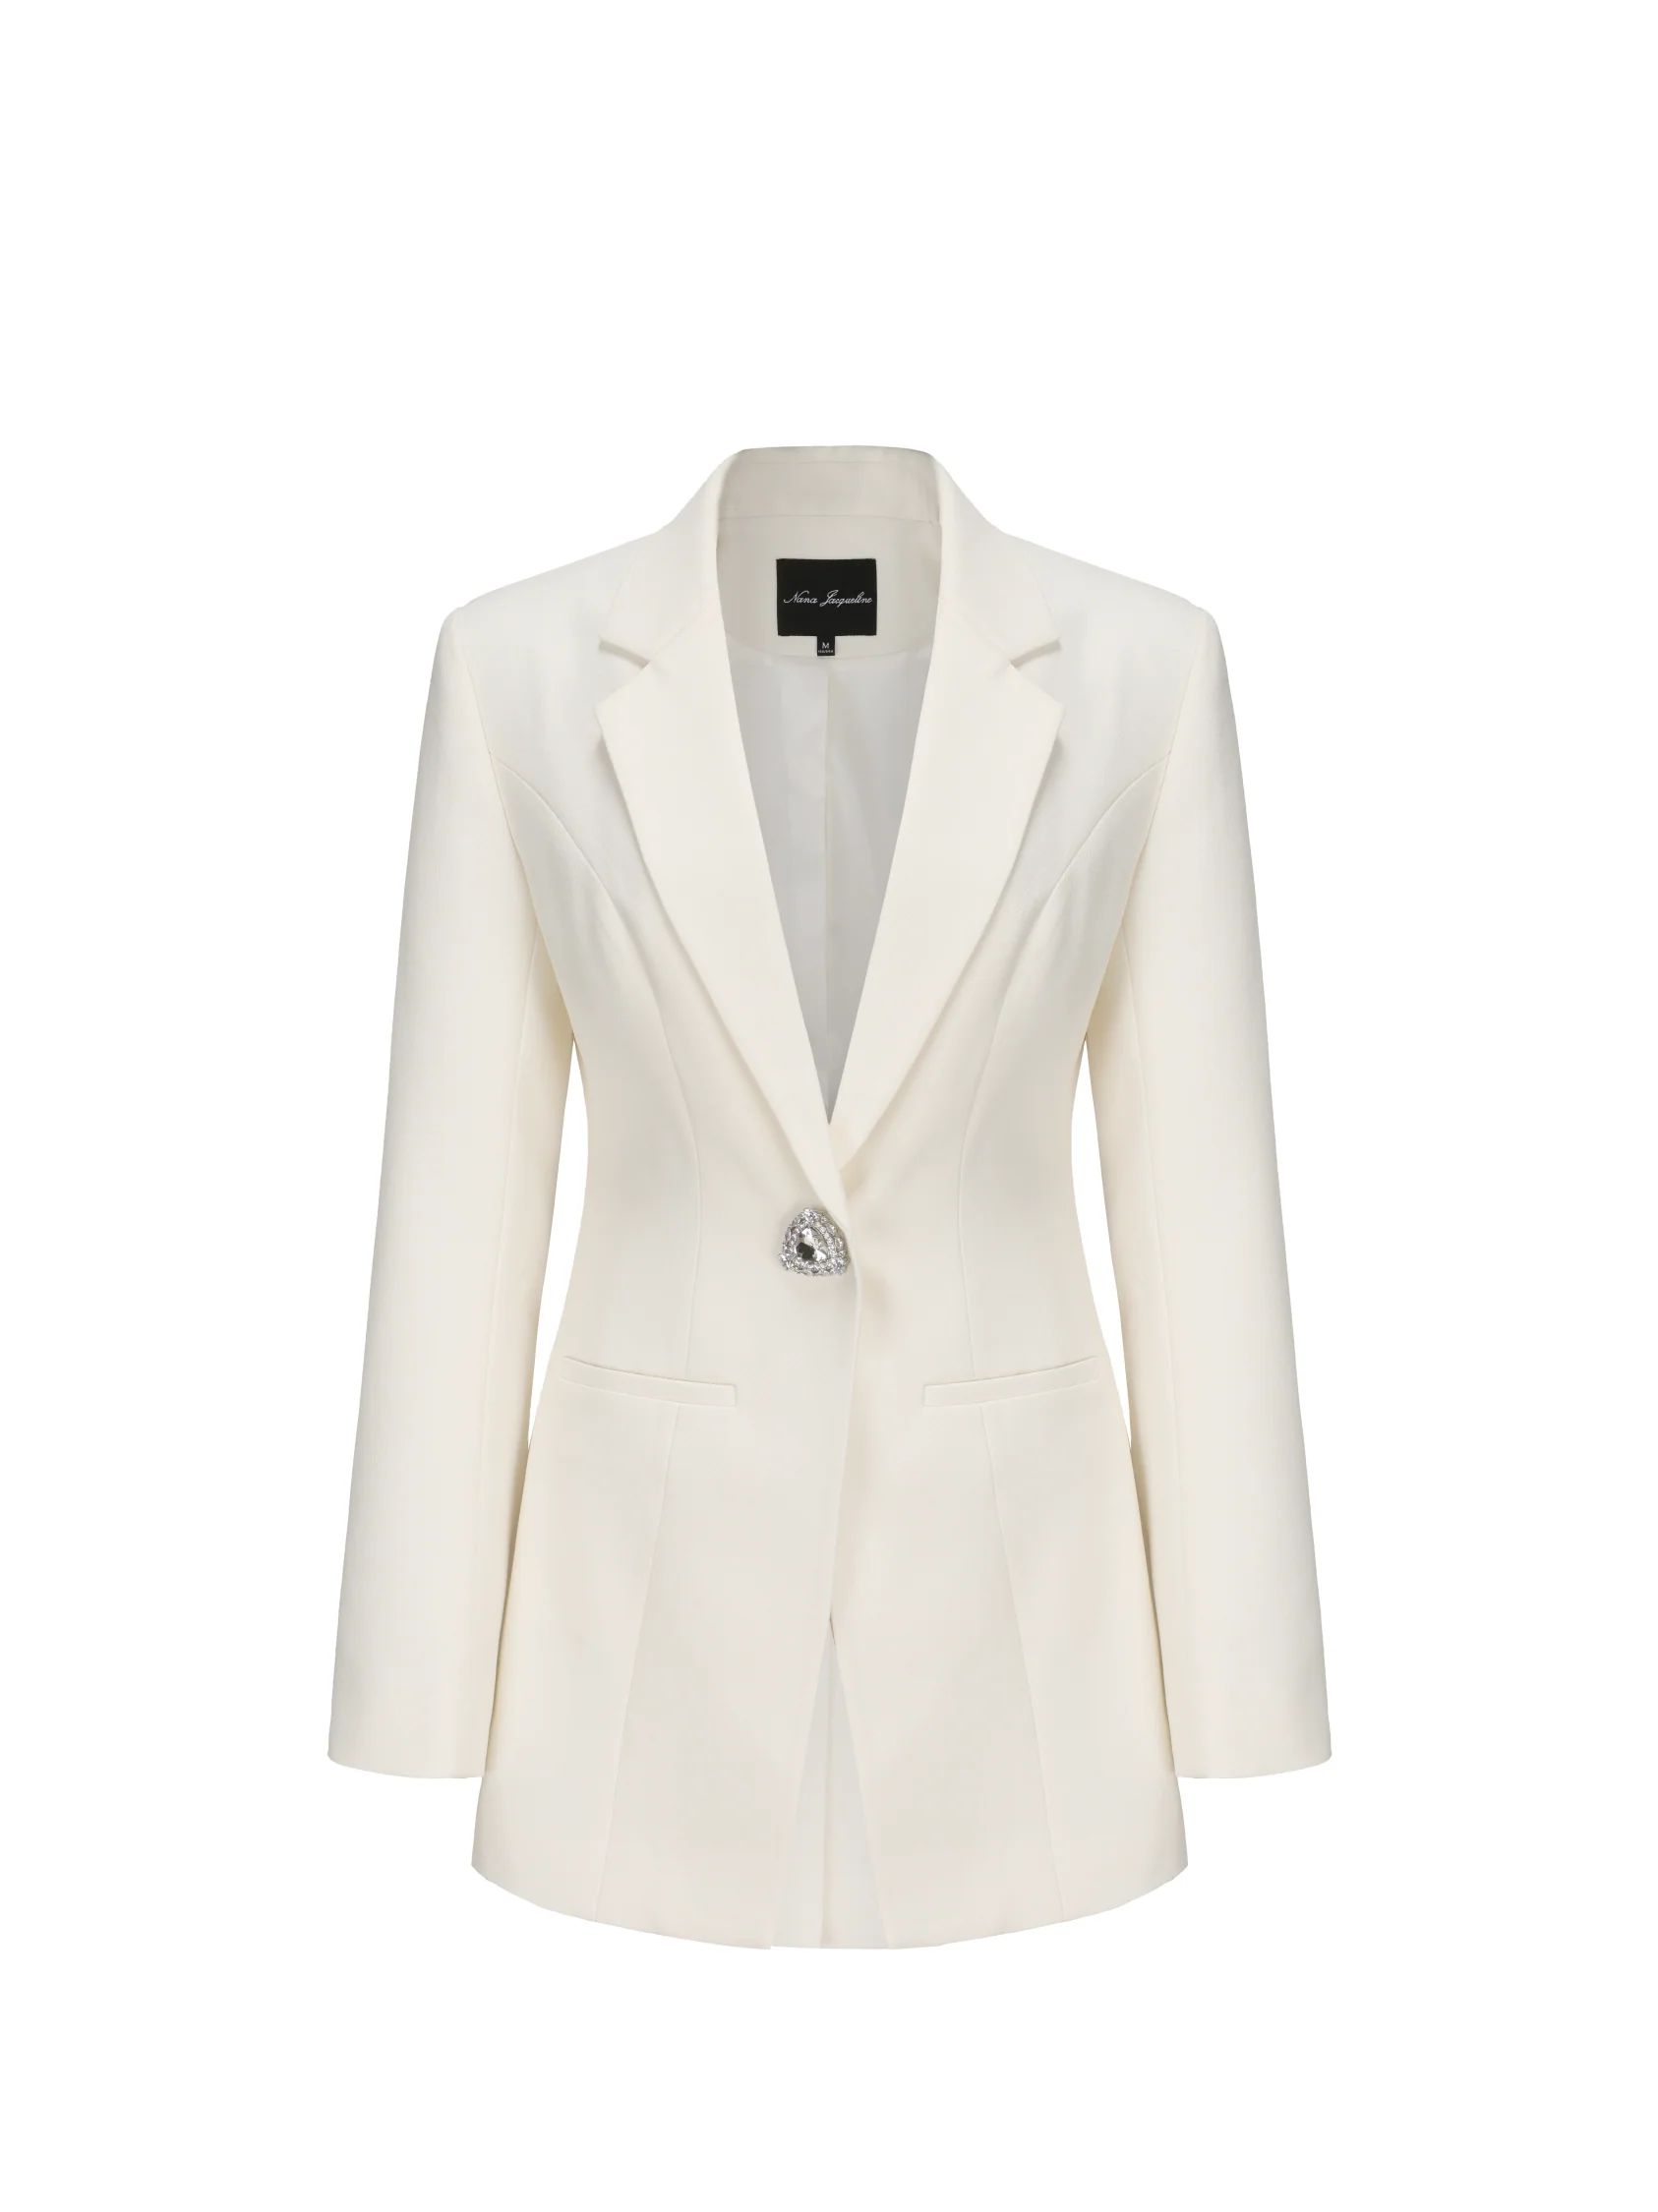 Thalia Suit Jacket (White) (Final Sale) | Nana Jacqueline